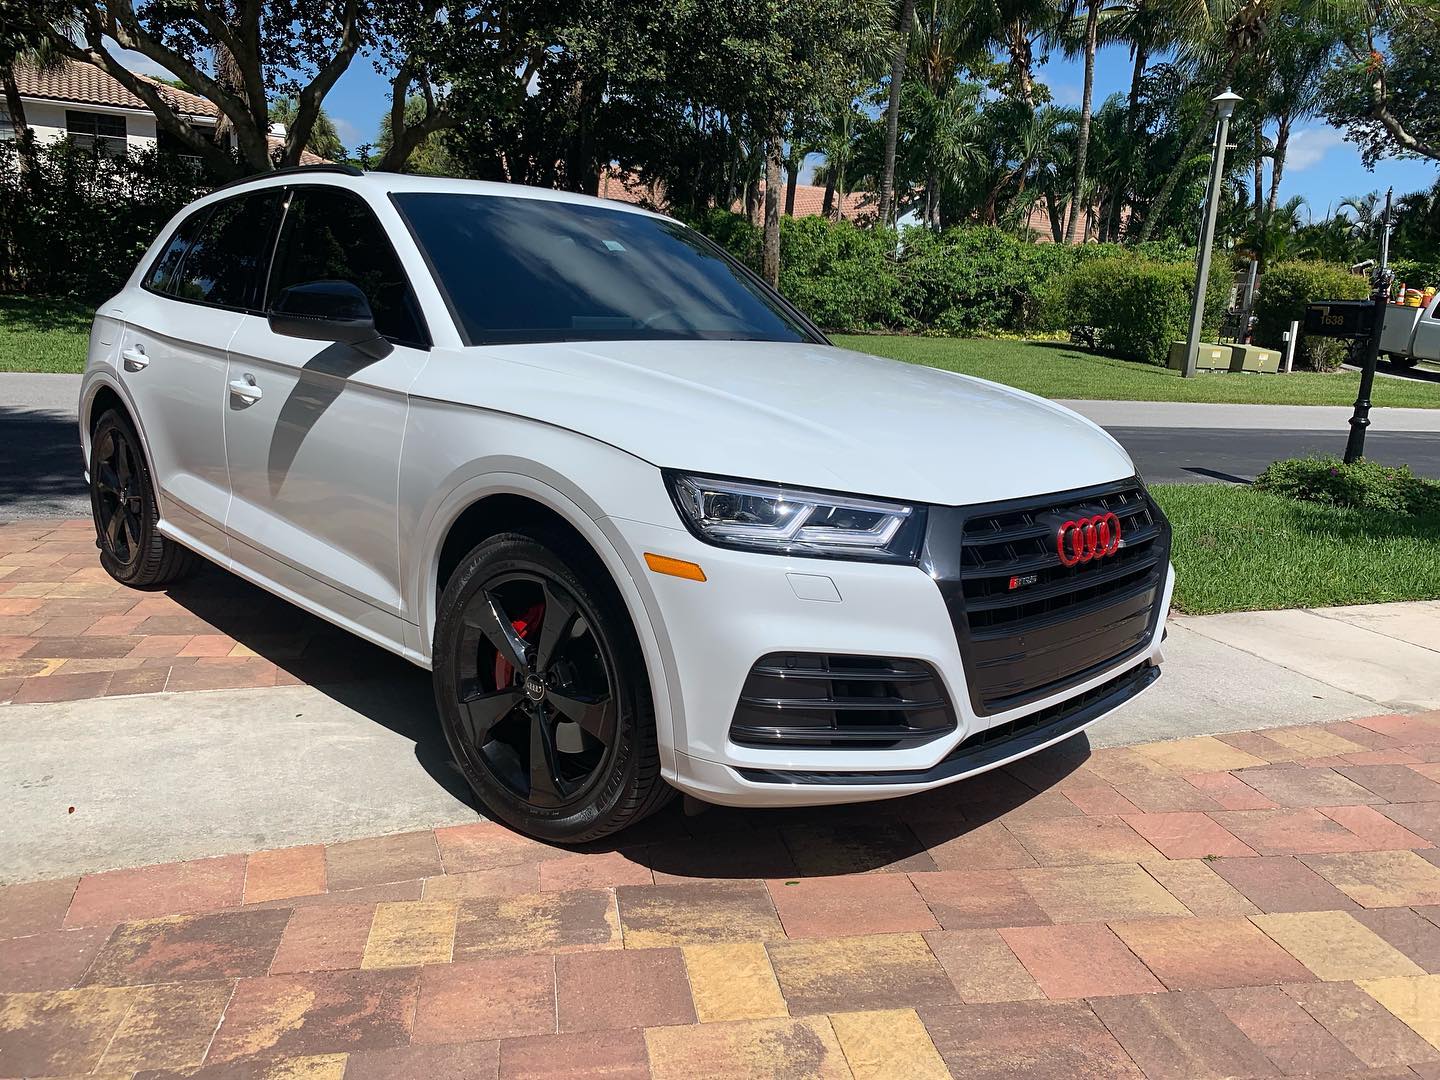 Custom K40 Police Laser Jammers and Hidden Radar Receiver Front Installed on New 2019 Audi IS Q5 in Boca Raton, FL